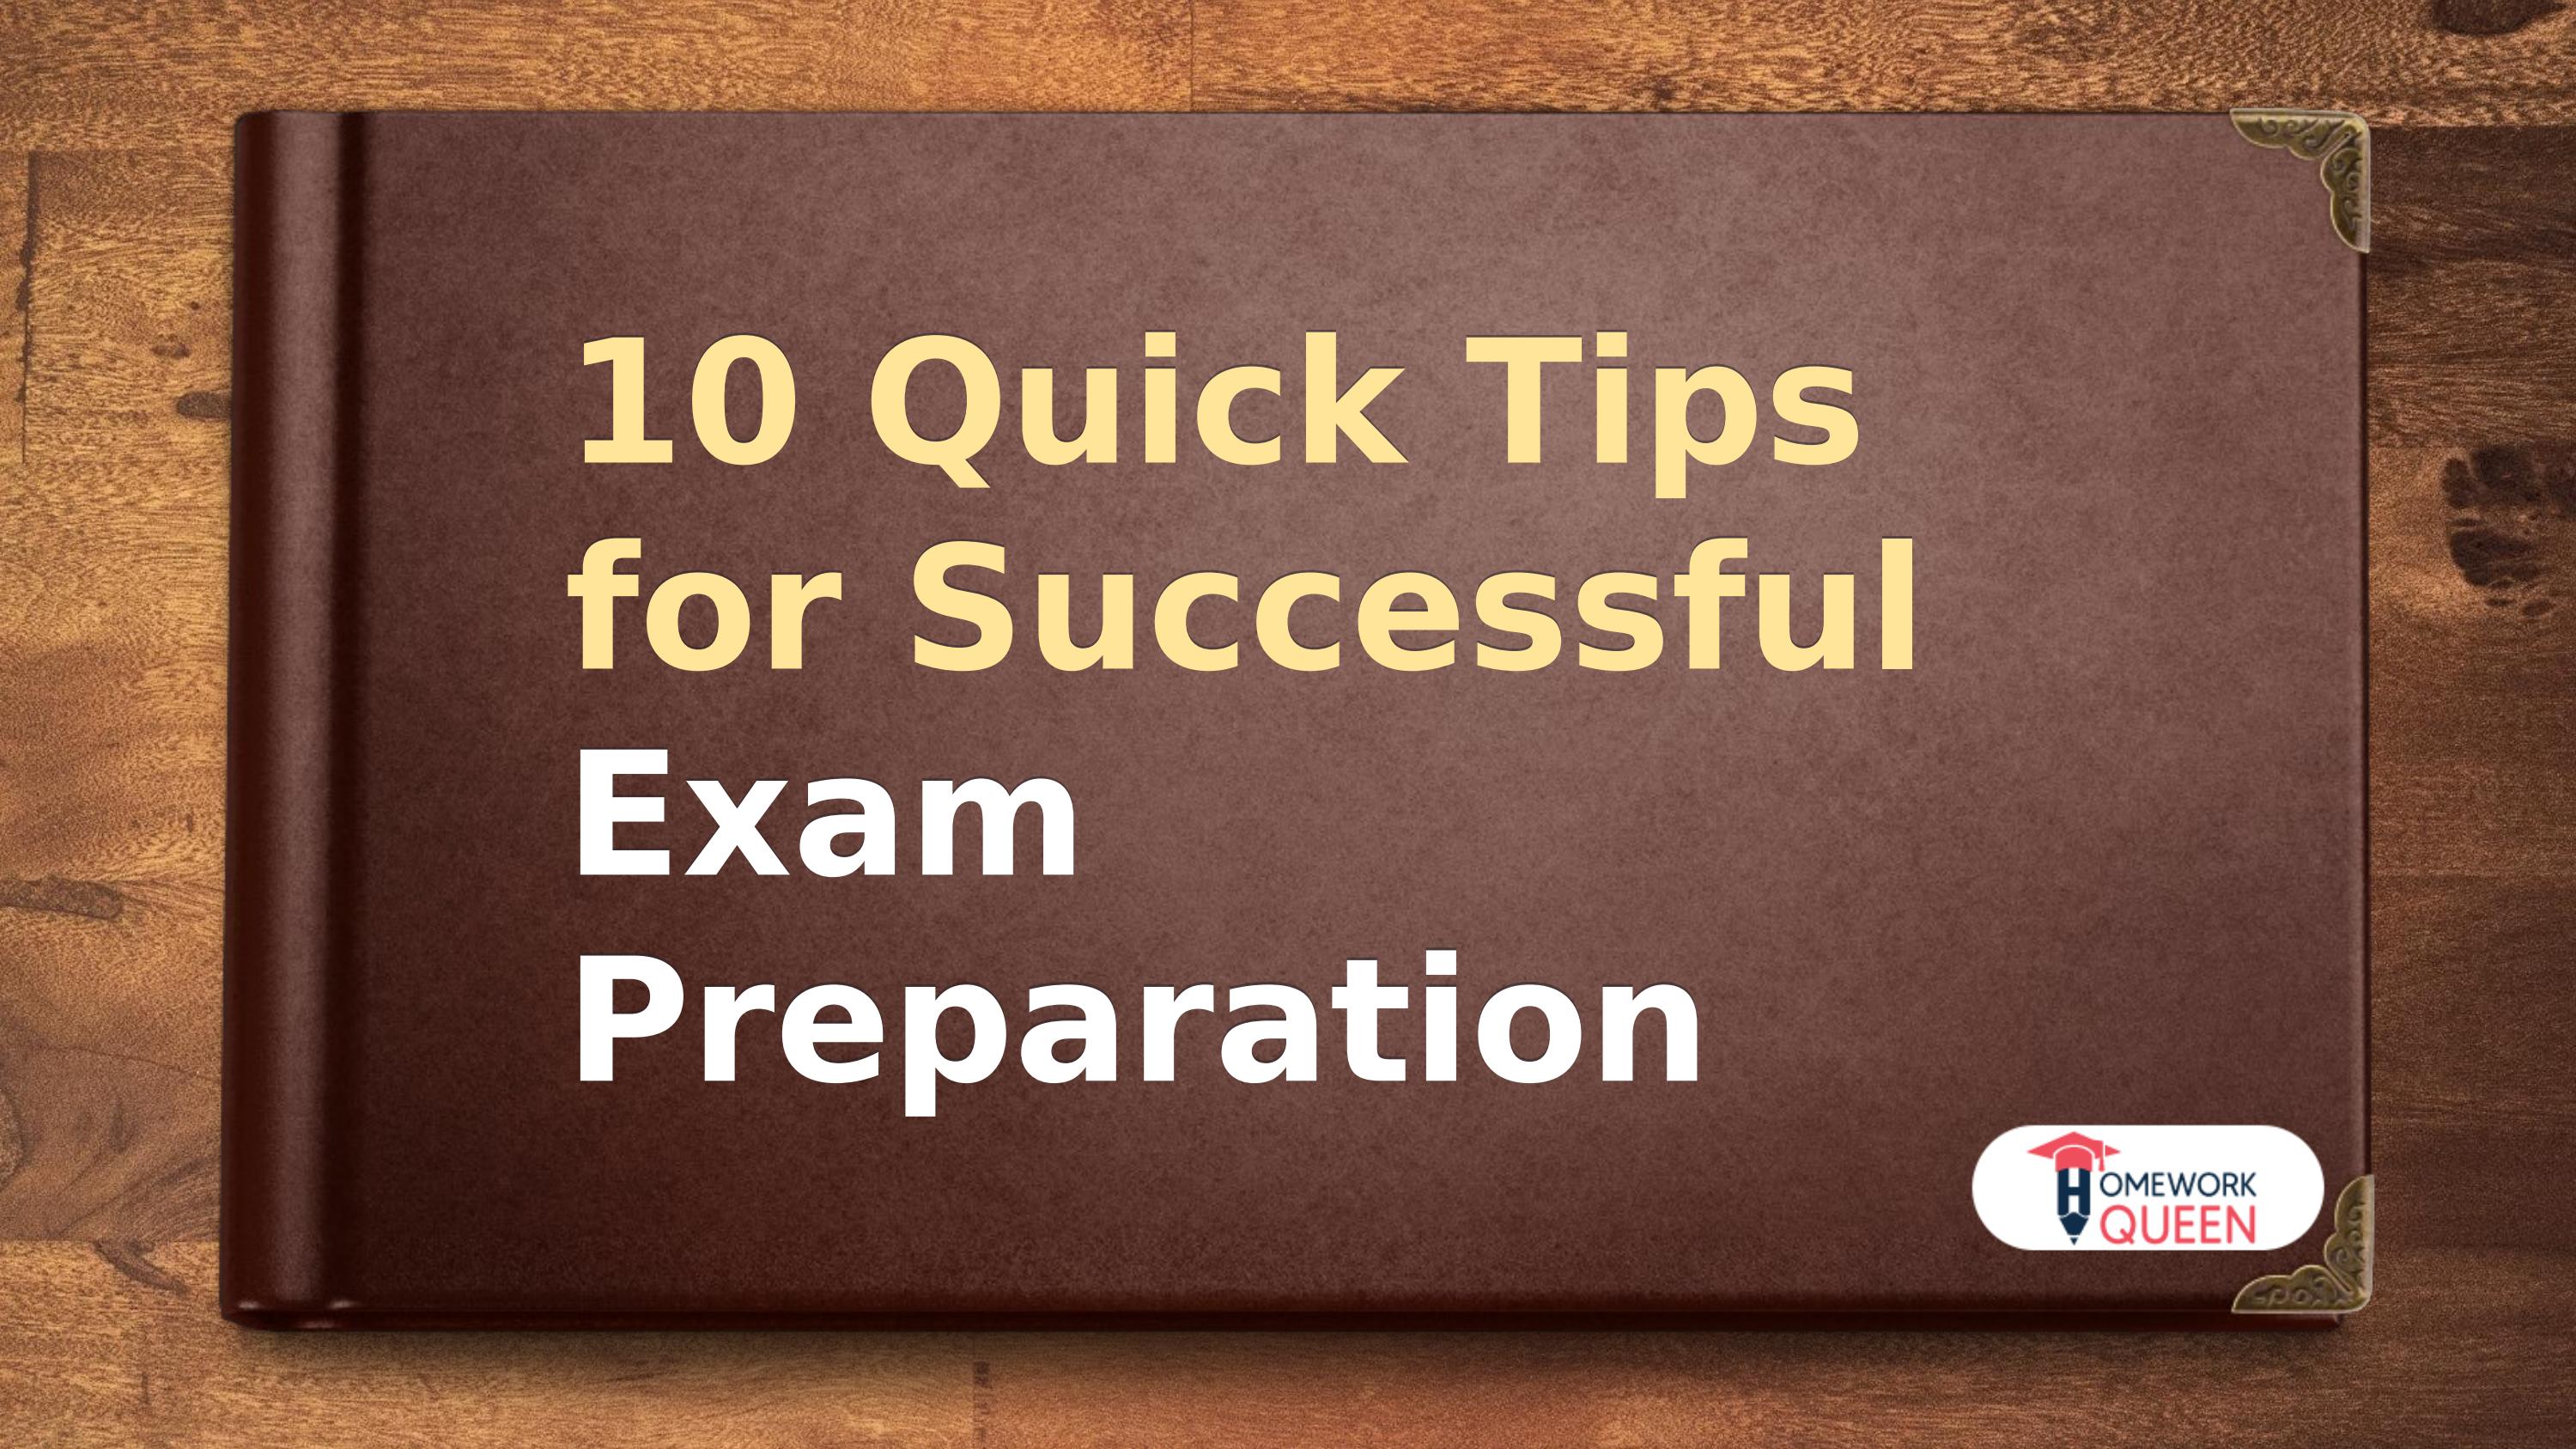 10 Quick Tips for Successful Exam Preparation